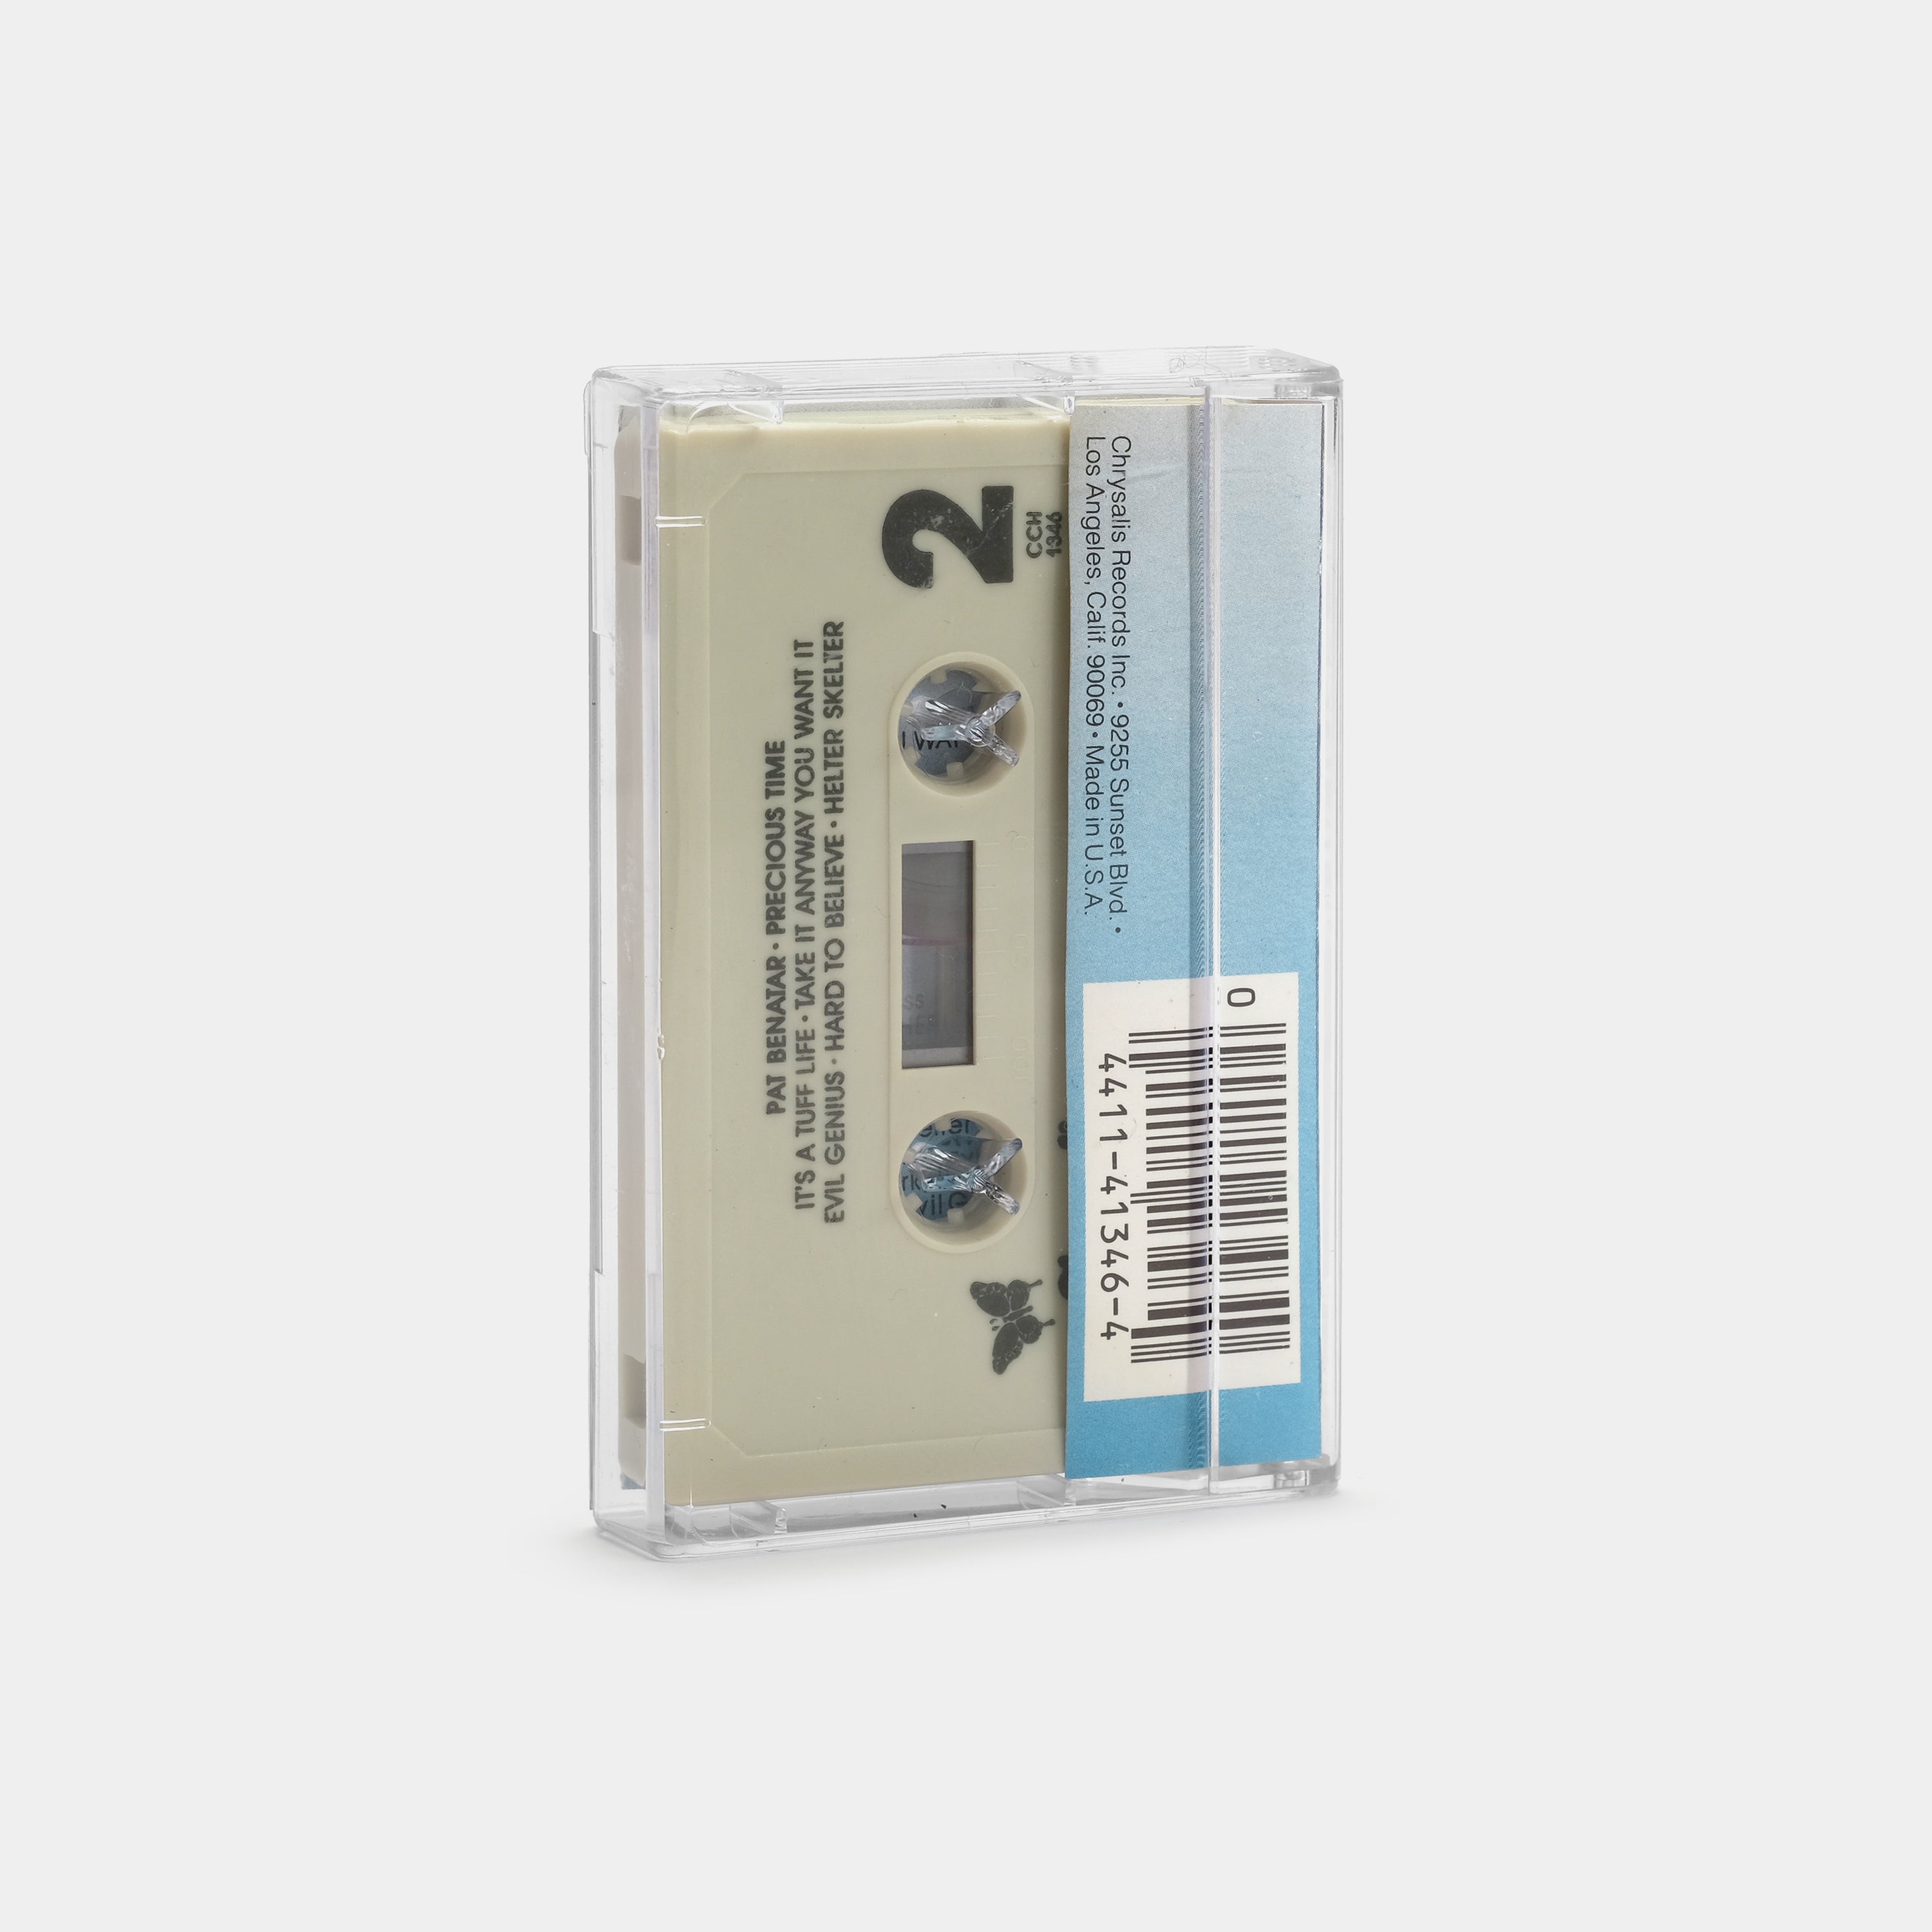 Pat Benatar - Precious Time Cassette Tape